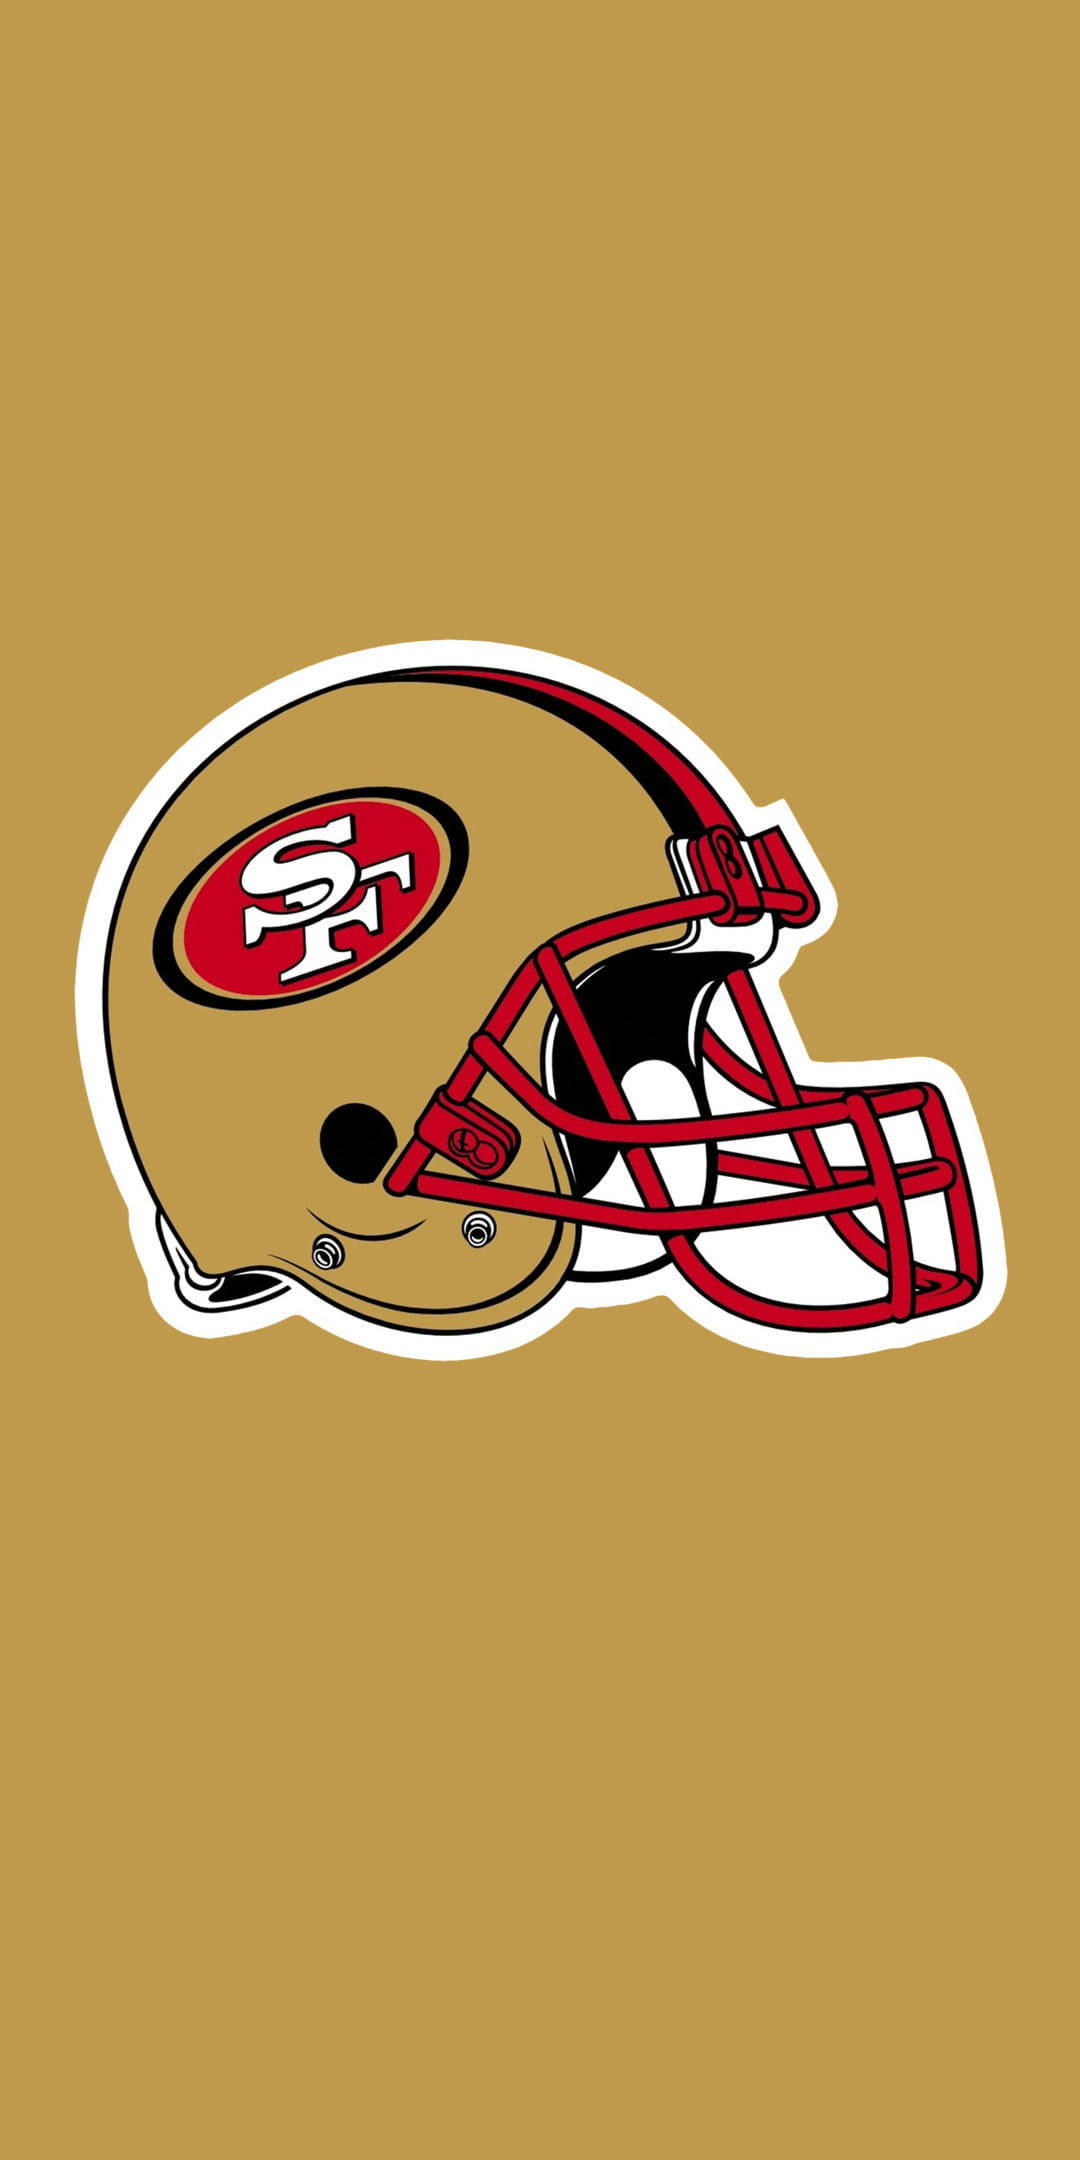 Gold Red Helmet Art 49ers Iphone Wallpaper